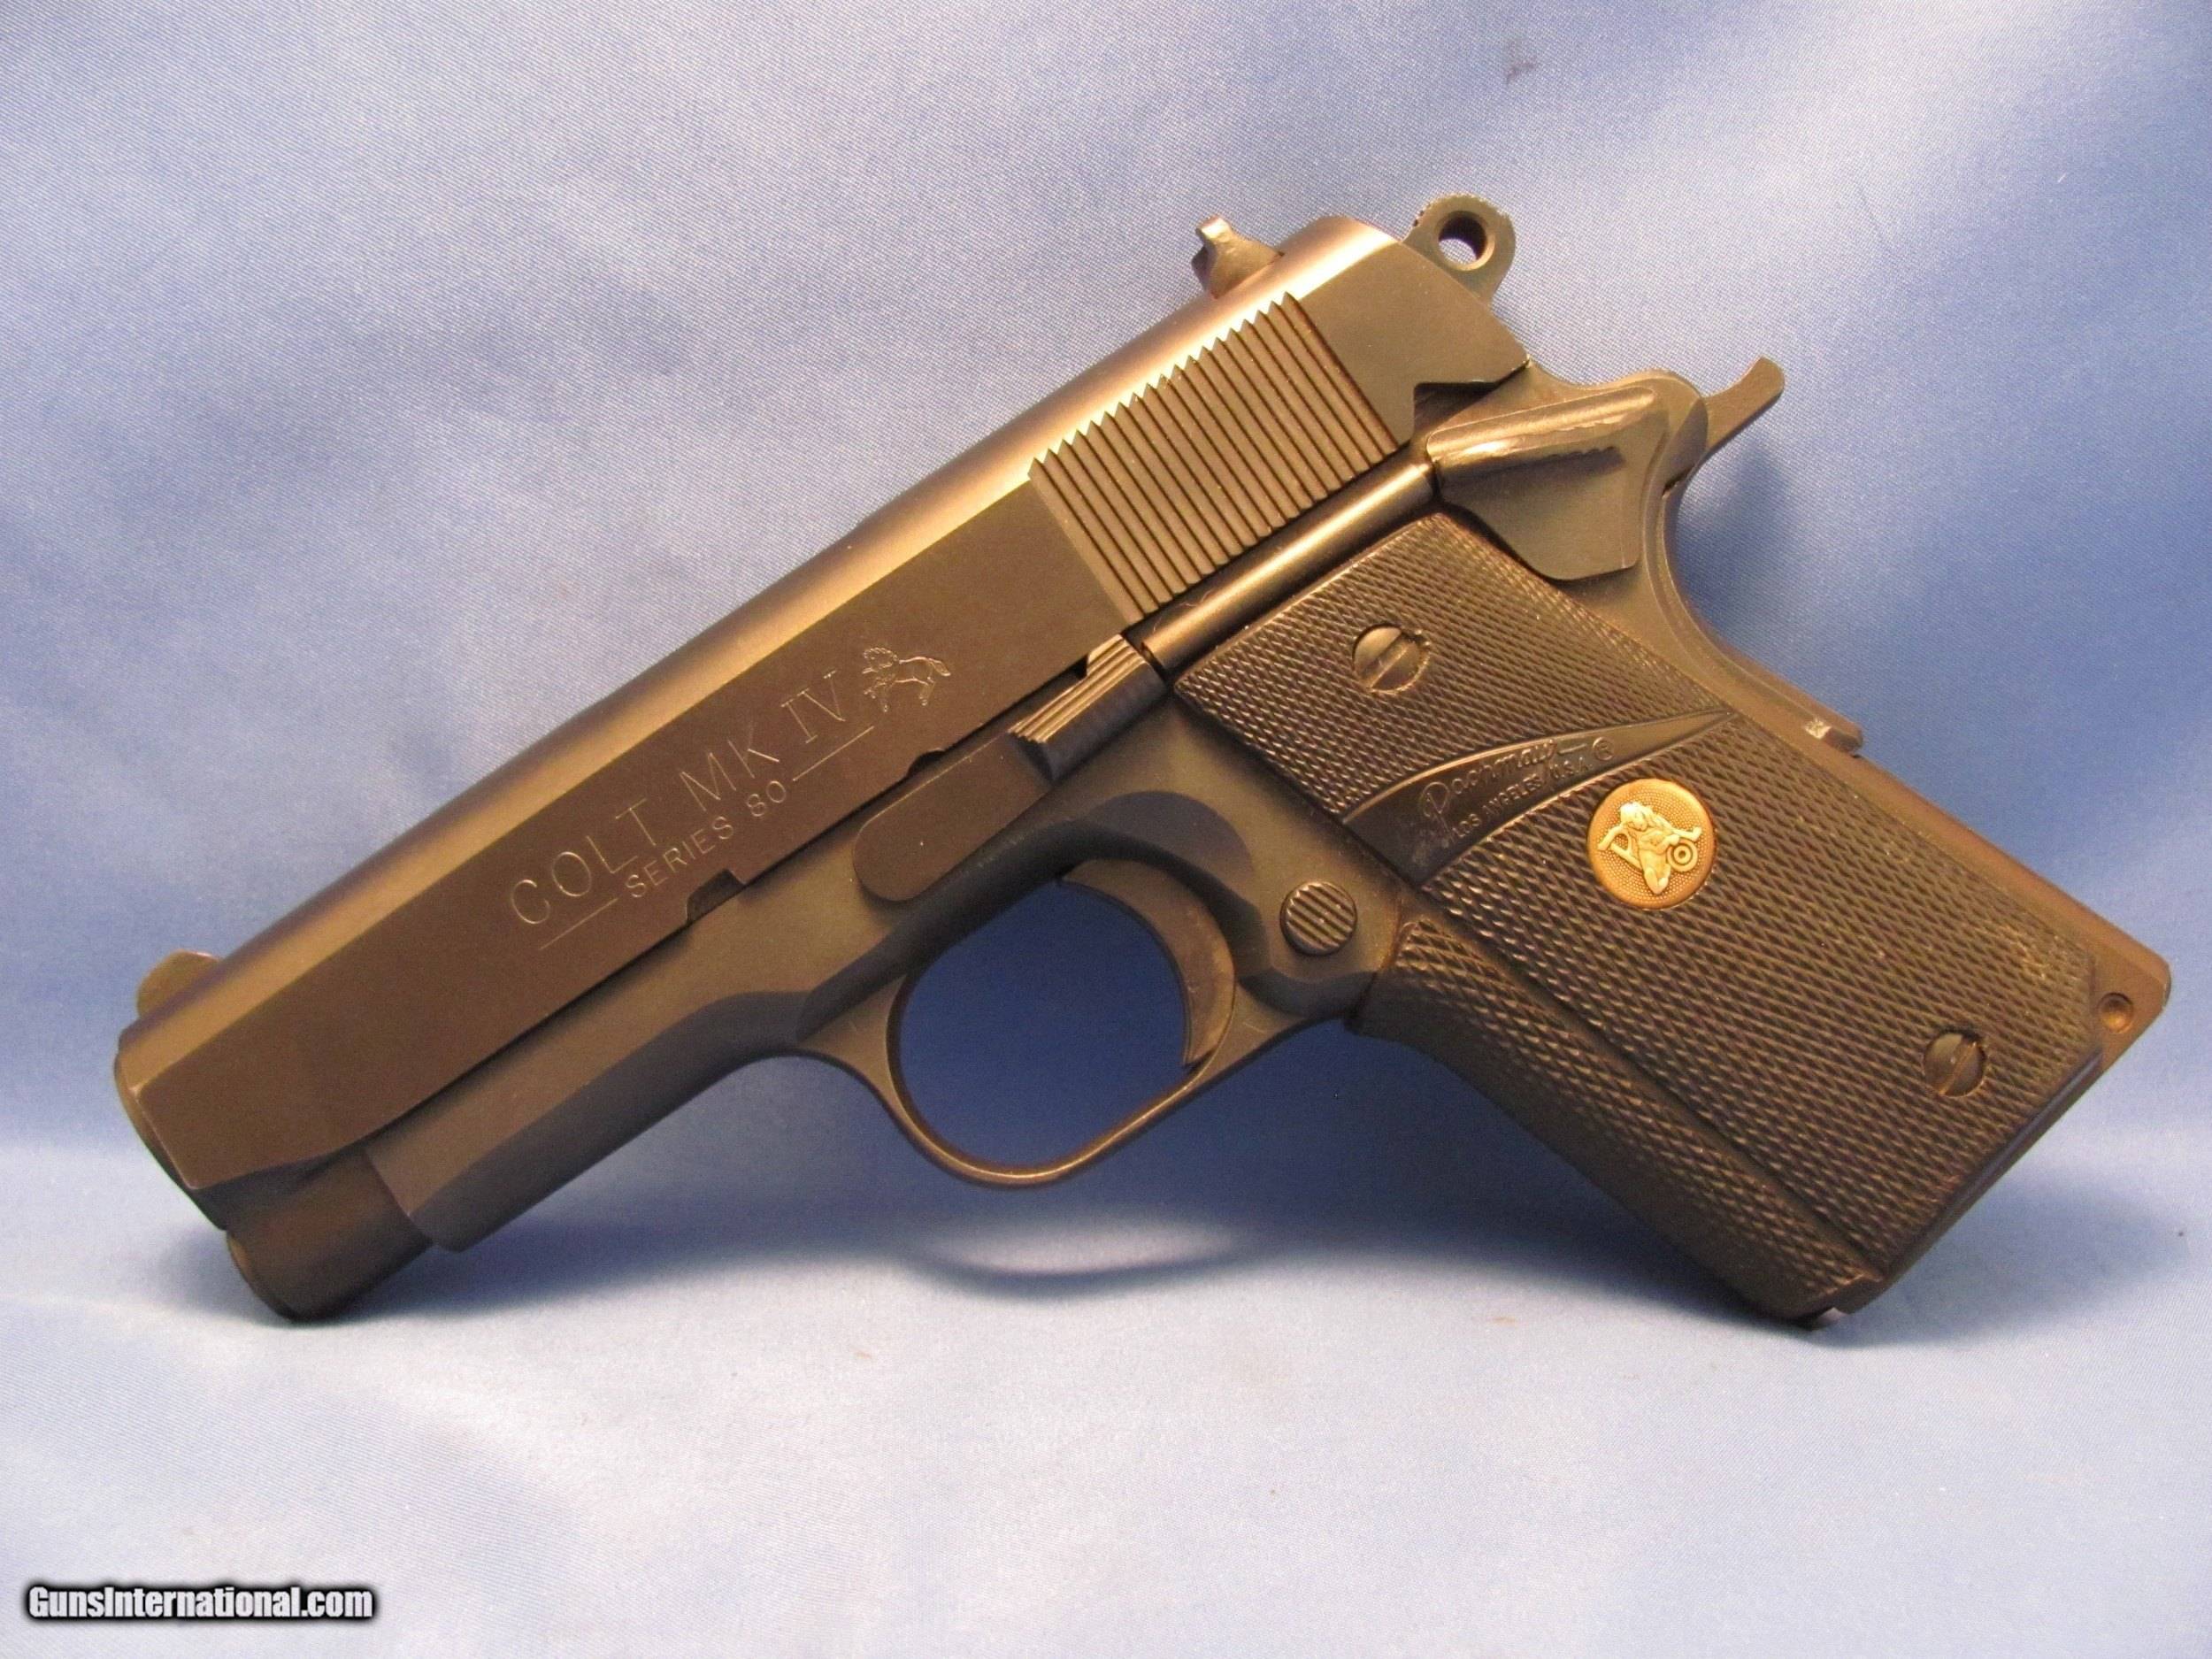 Colt xse lightweight commander model пистолет — характеристики, фото, ттх